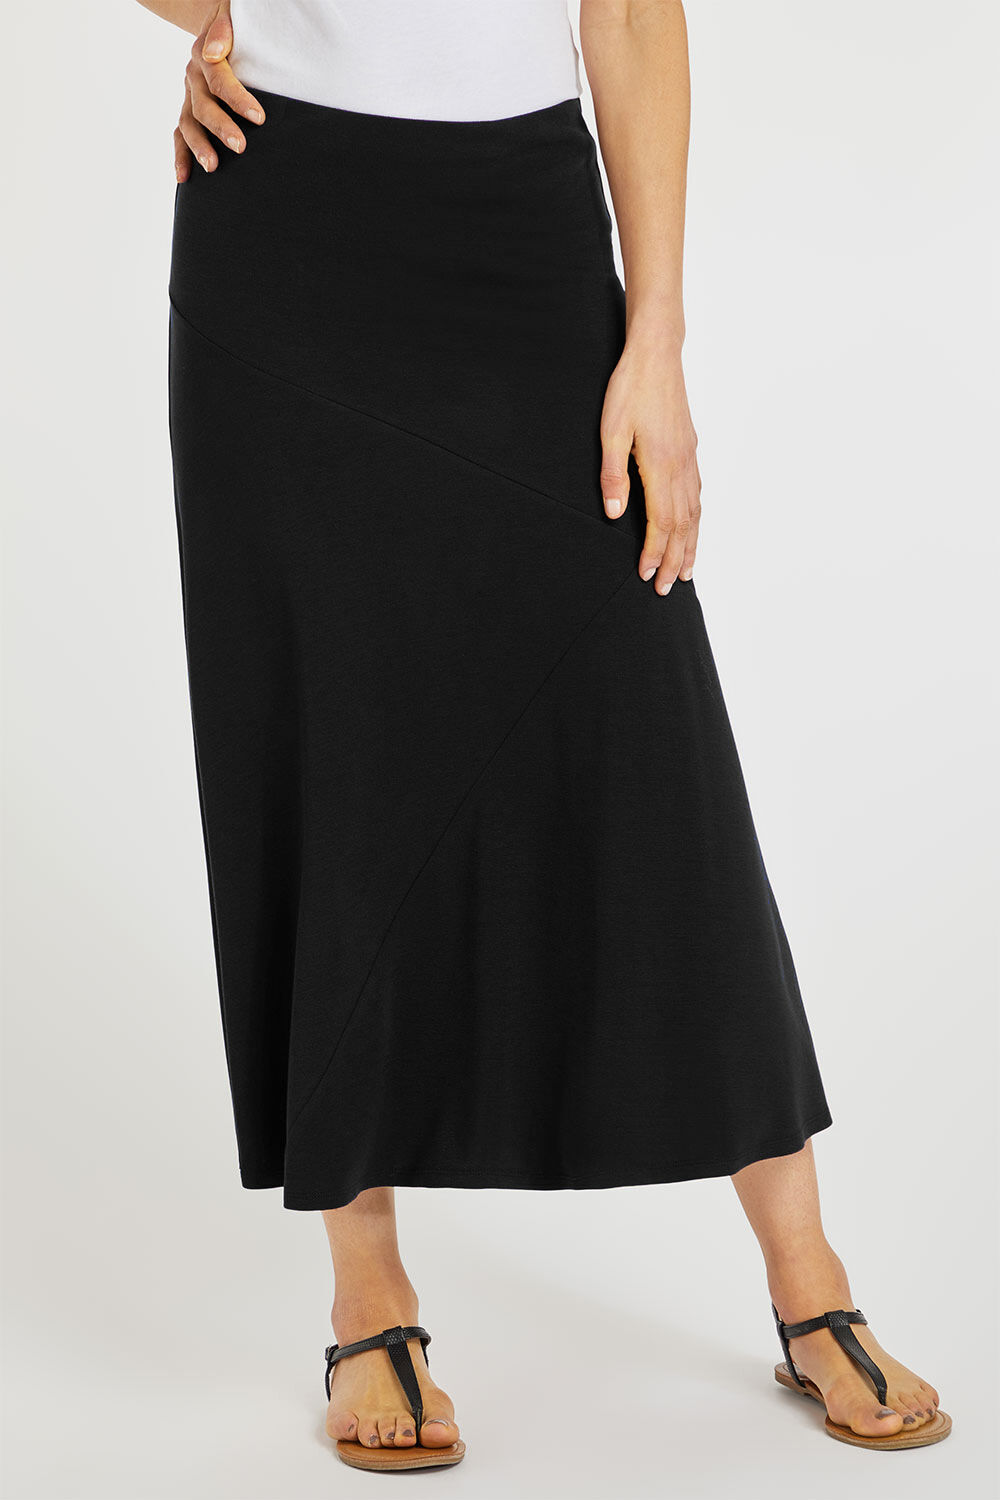 Bonmarche Black Elasticated Panelled Skirt, Size: 14